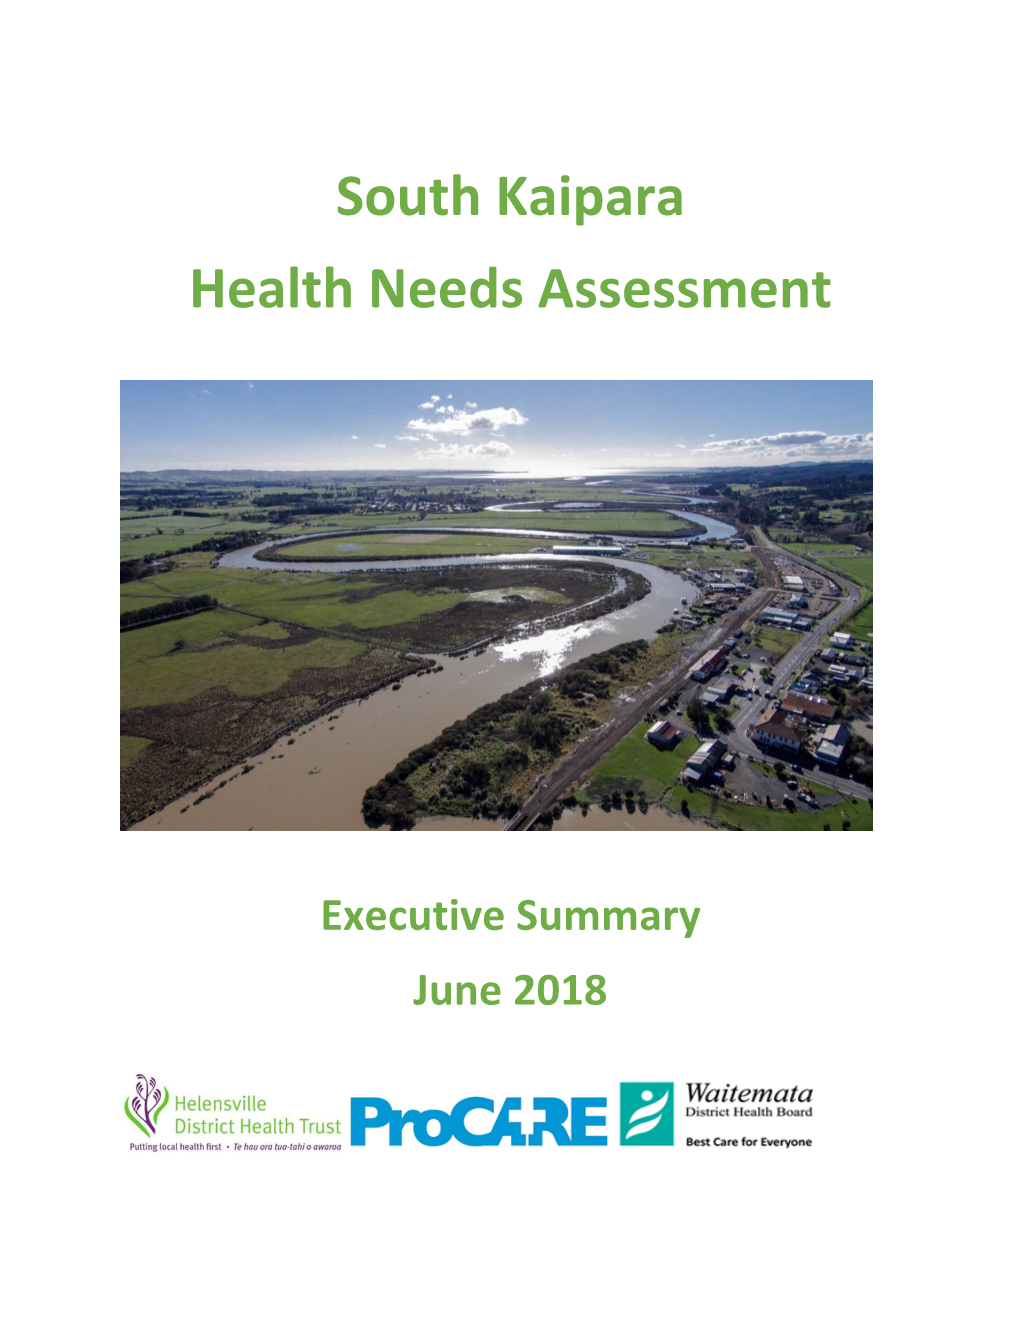 South Kaipara Health Needs Assessment